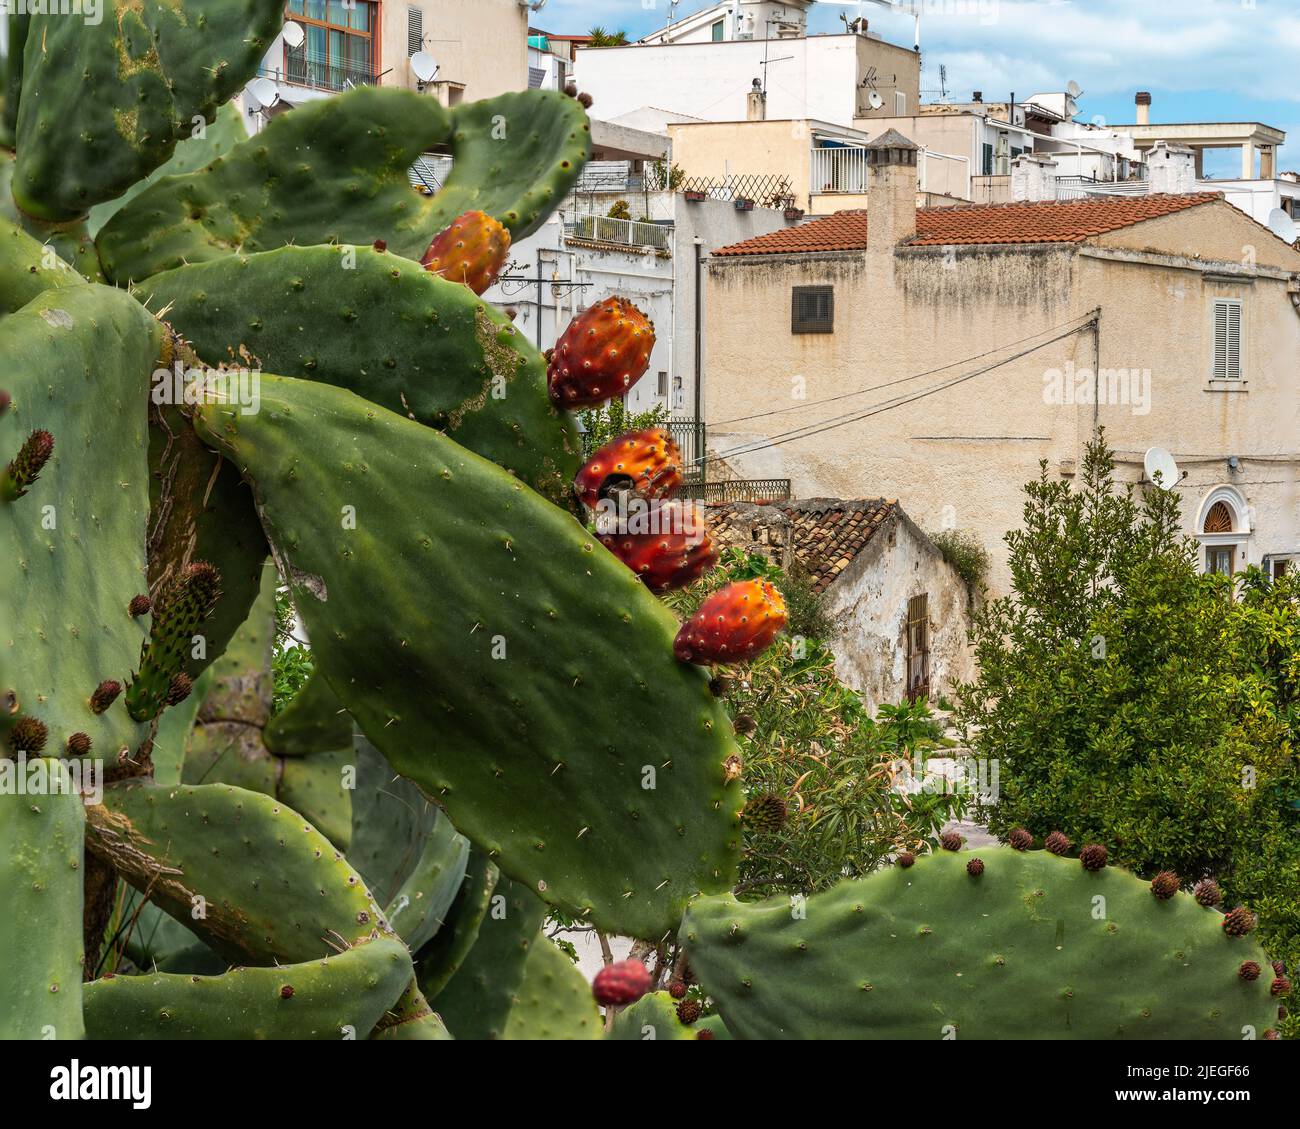 Frutos de pera espinosos frente a la ciudad costera de Peschici. Peschici, provincia de Foggia, Puglia, Italia, Europa Foto de stock